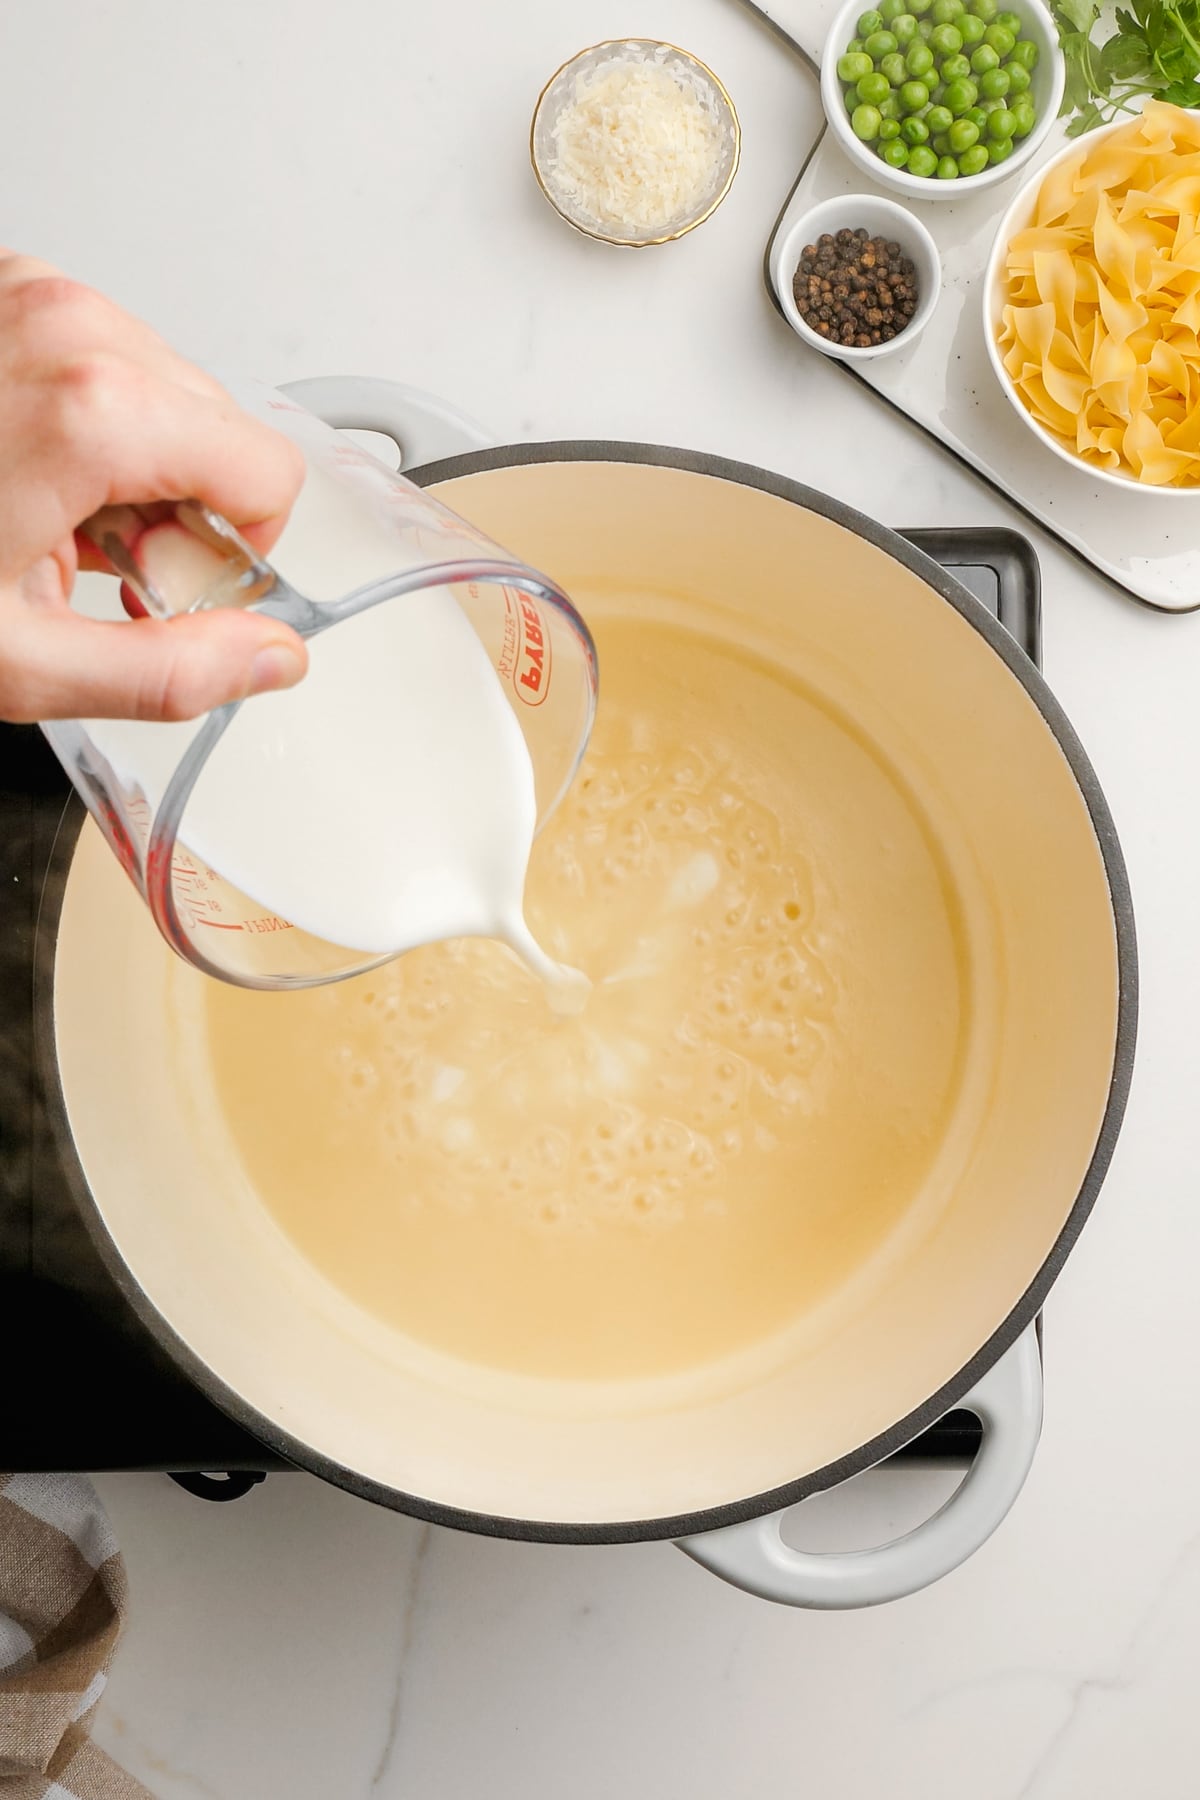 Woman's hands pour milk into saucepan with roux